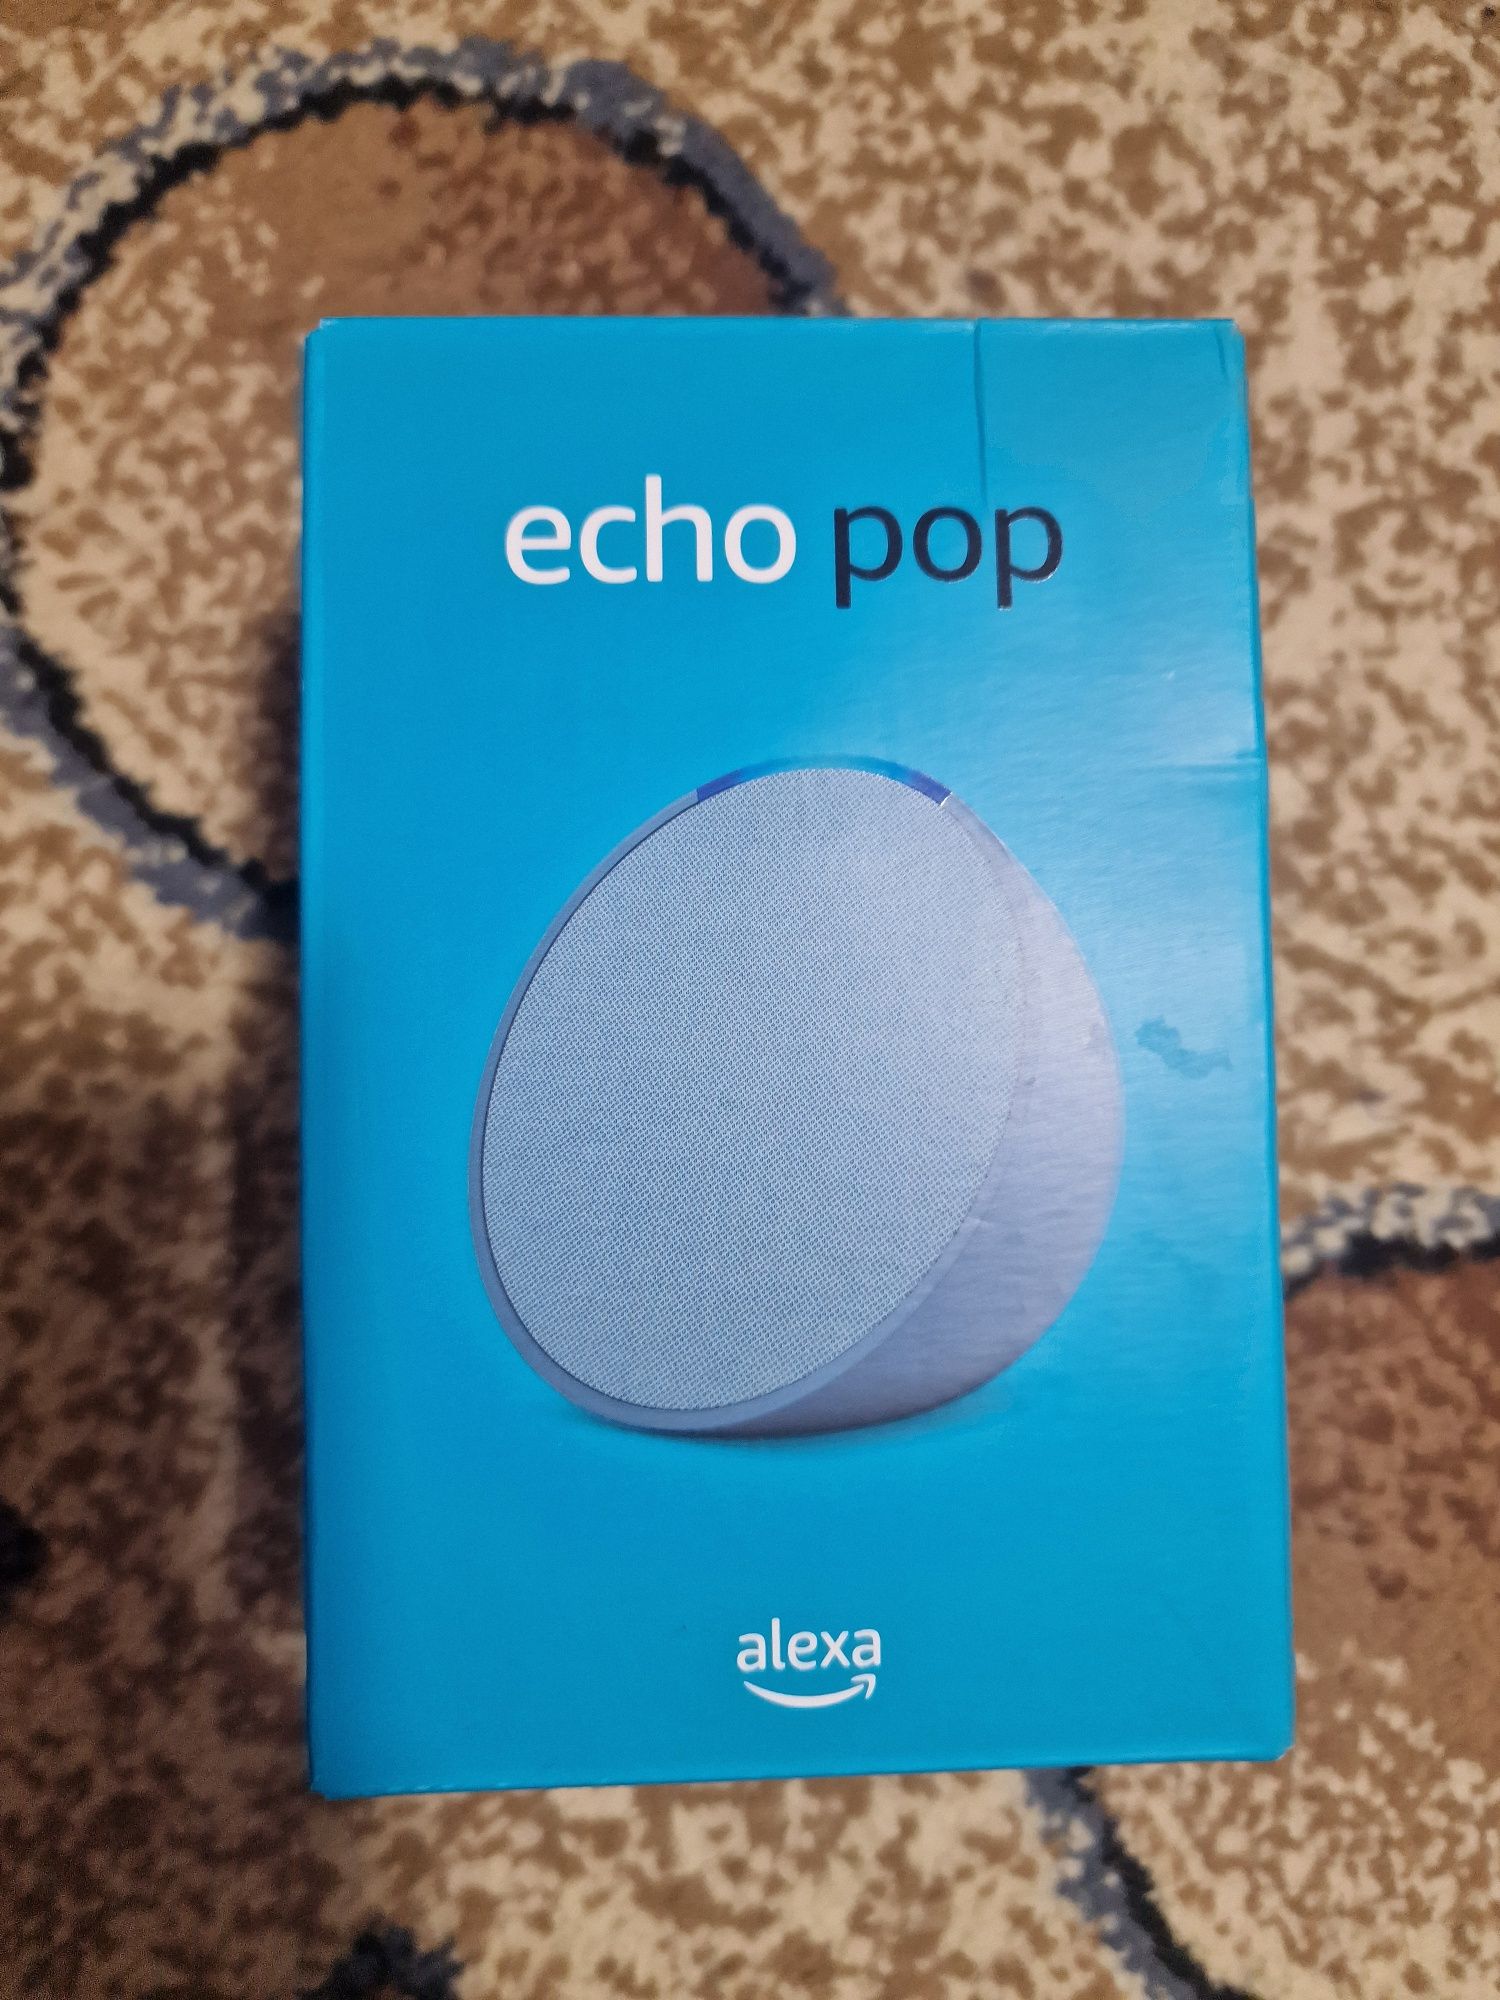 Boxa Echo Pop Alexa